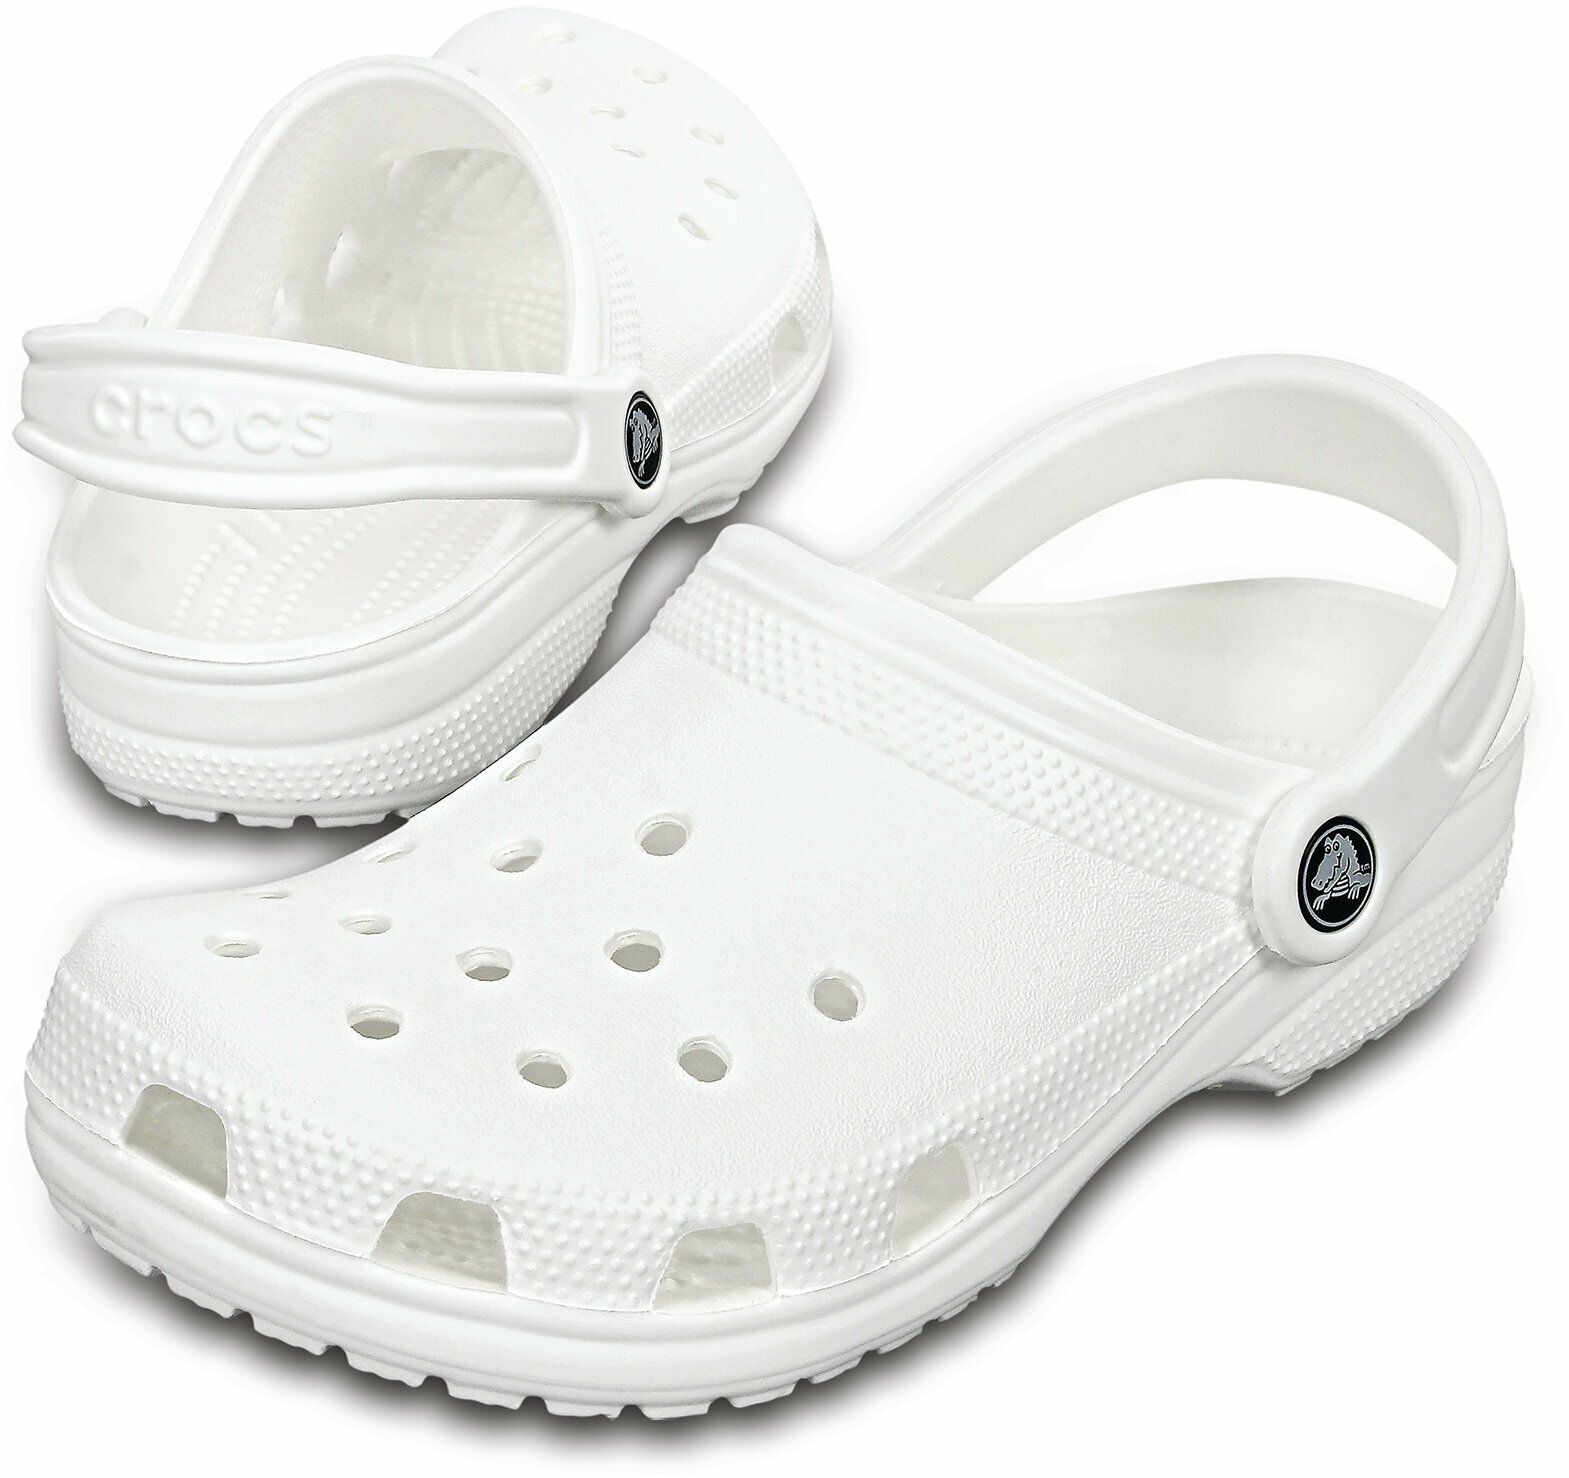 Unisex cipele za jedrenje Crocs Classic Clog White 50-51